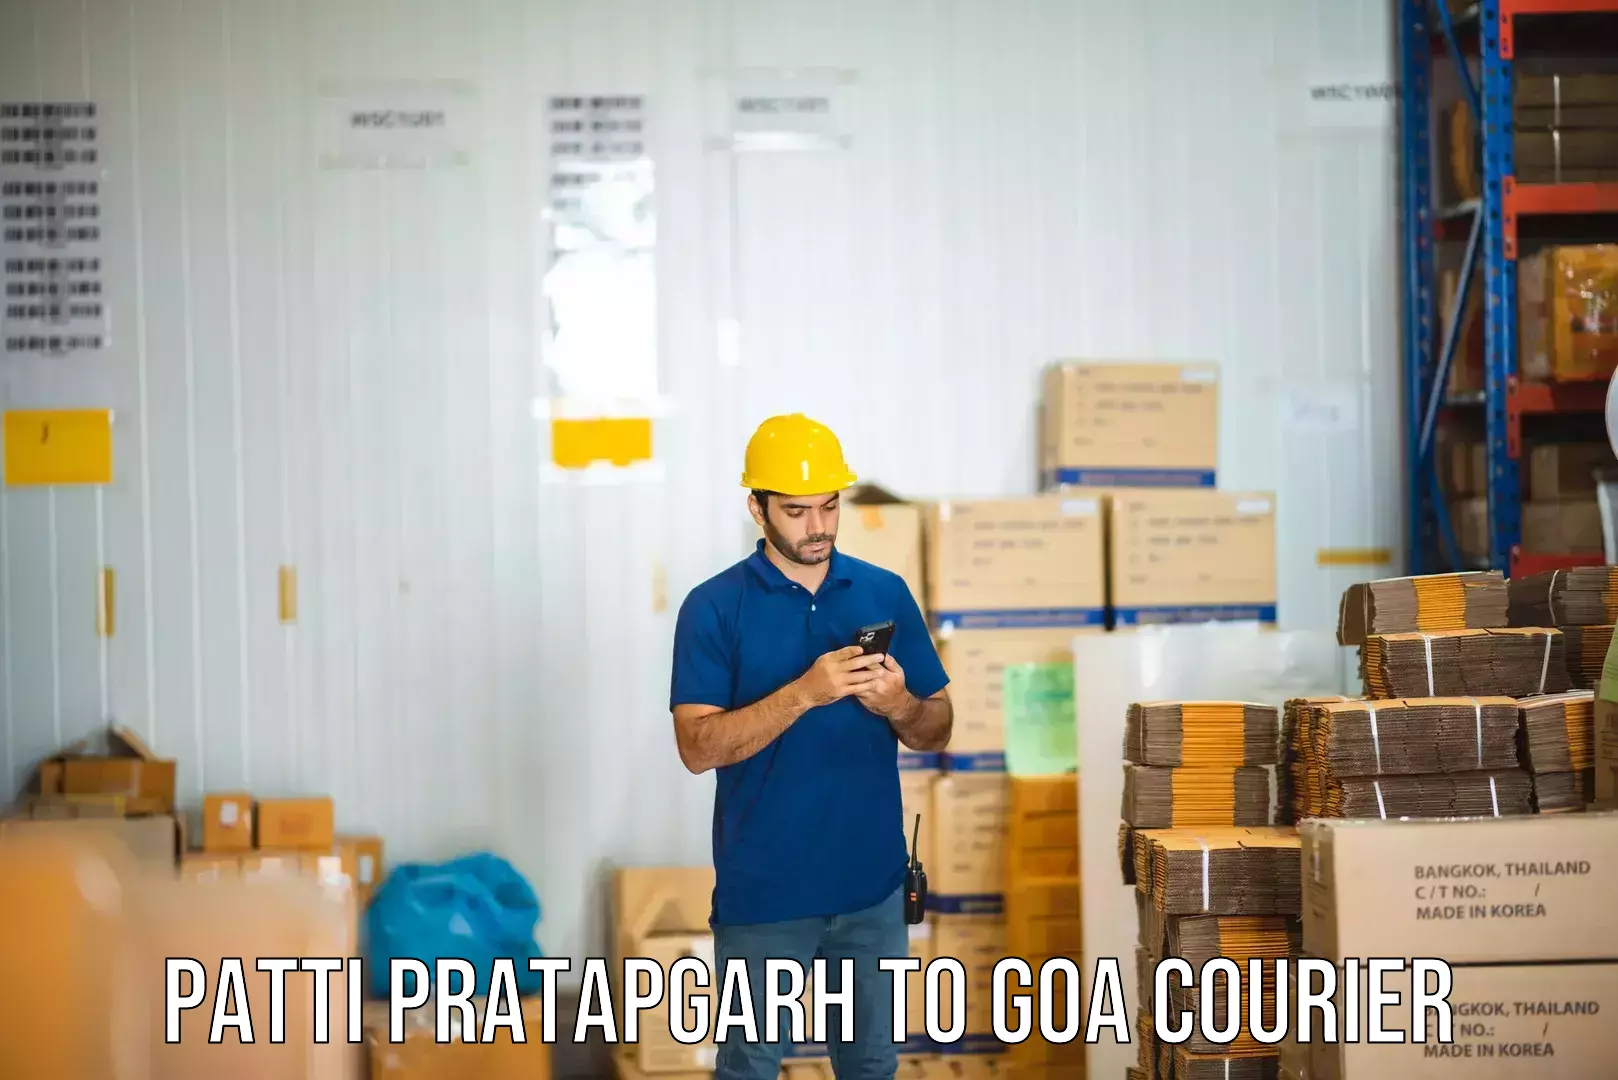 High-quality delivery services Patti Pratapgarh to Panaji